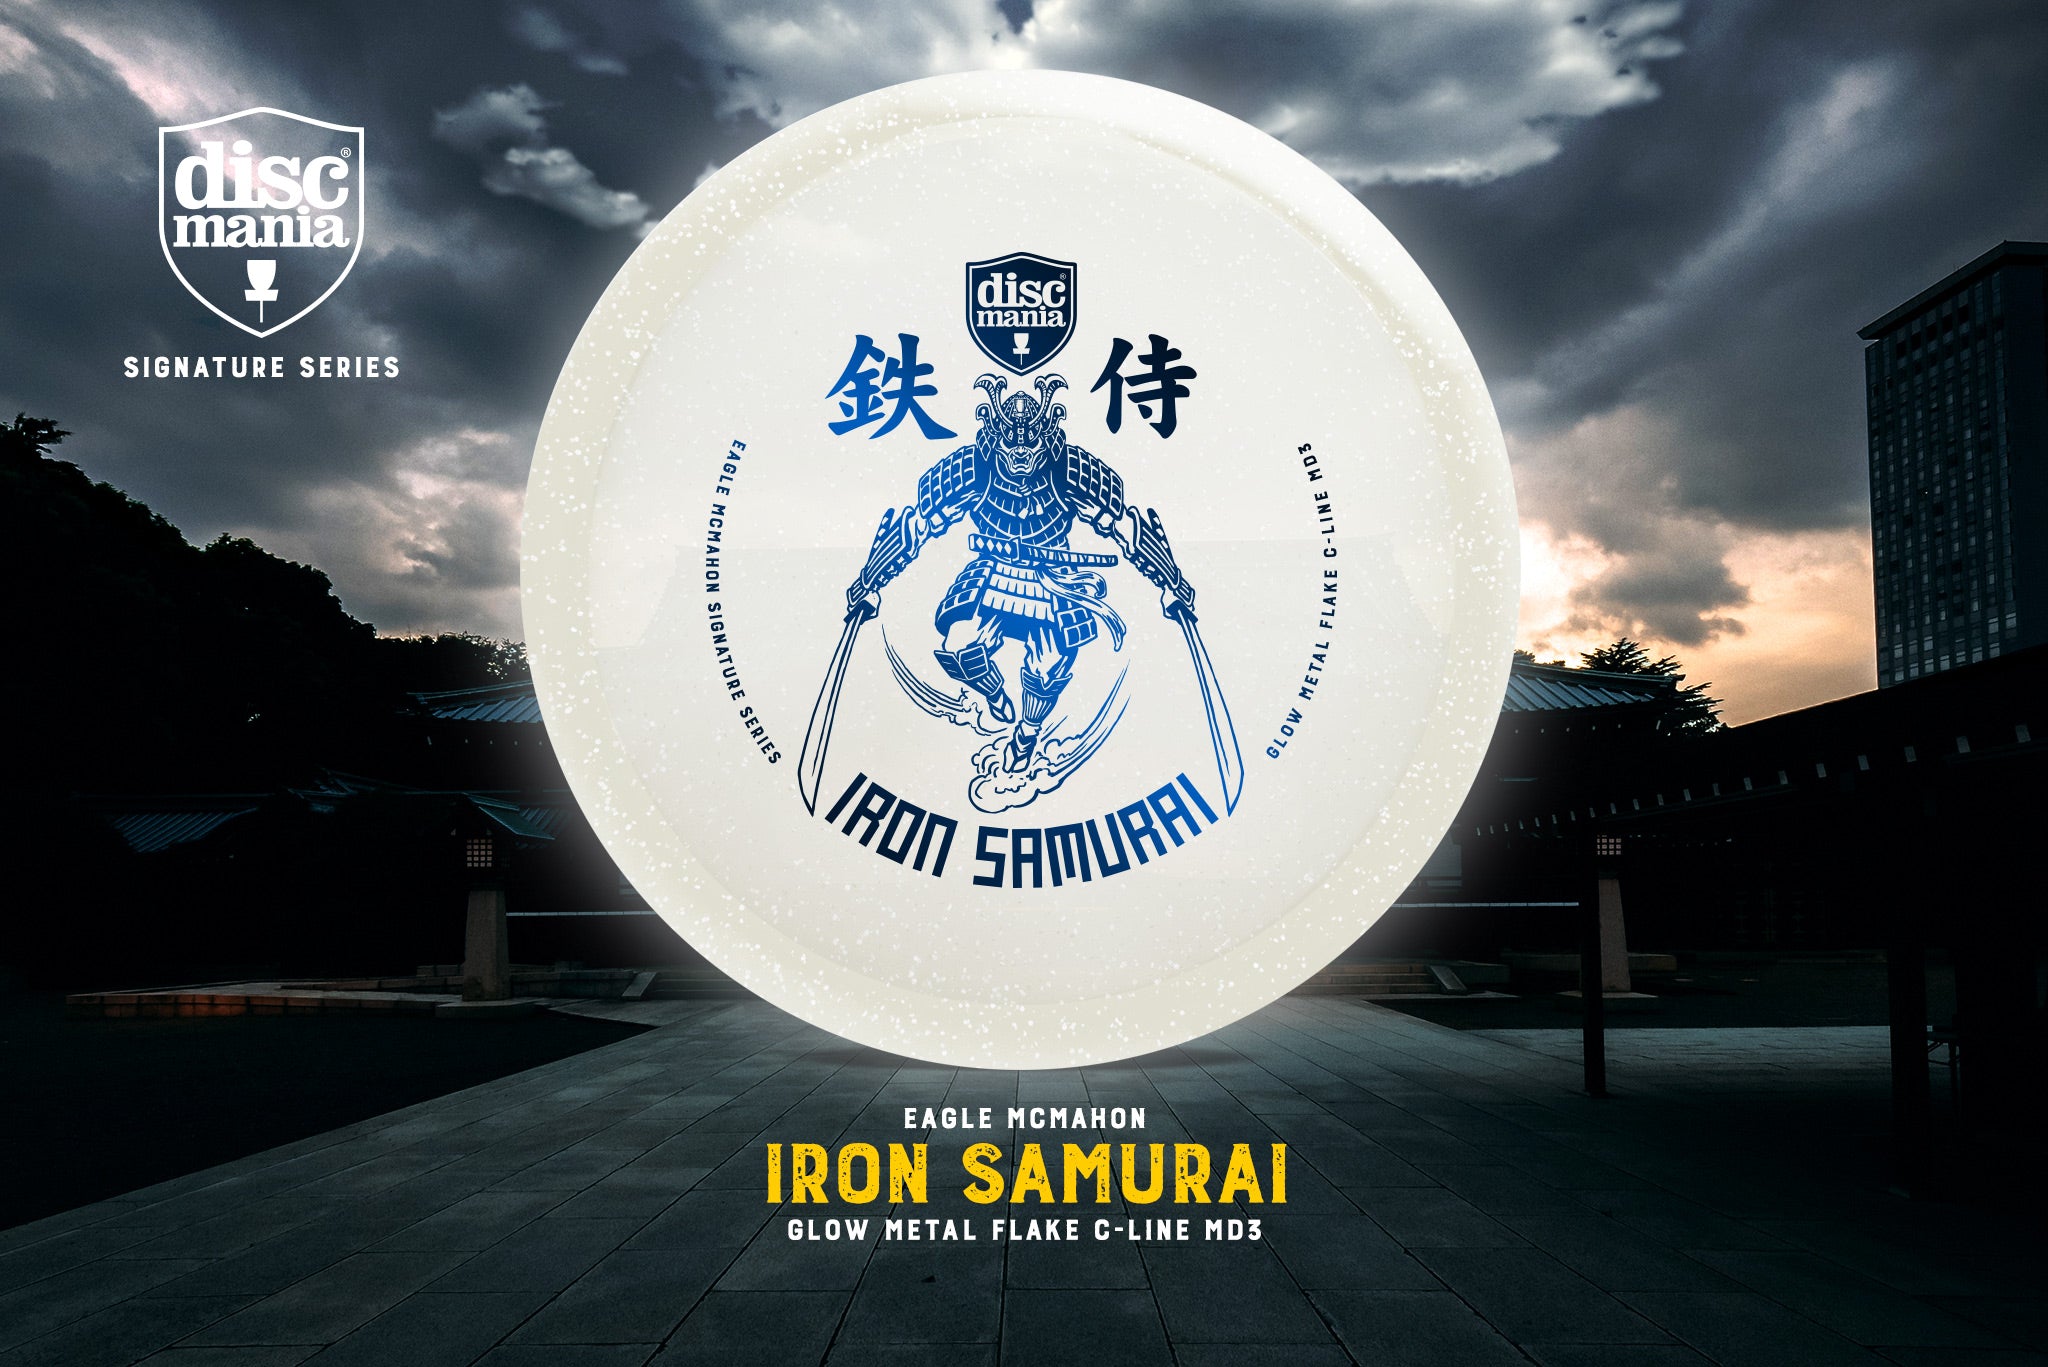 Discmania Iron Samurai MD3